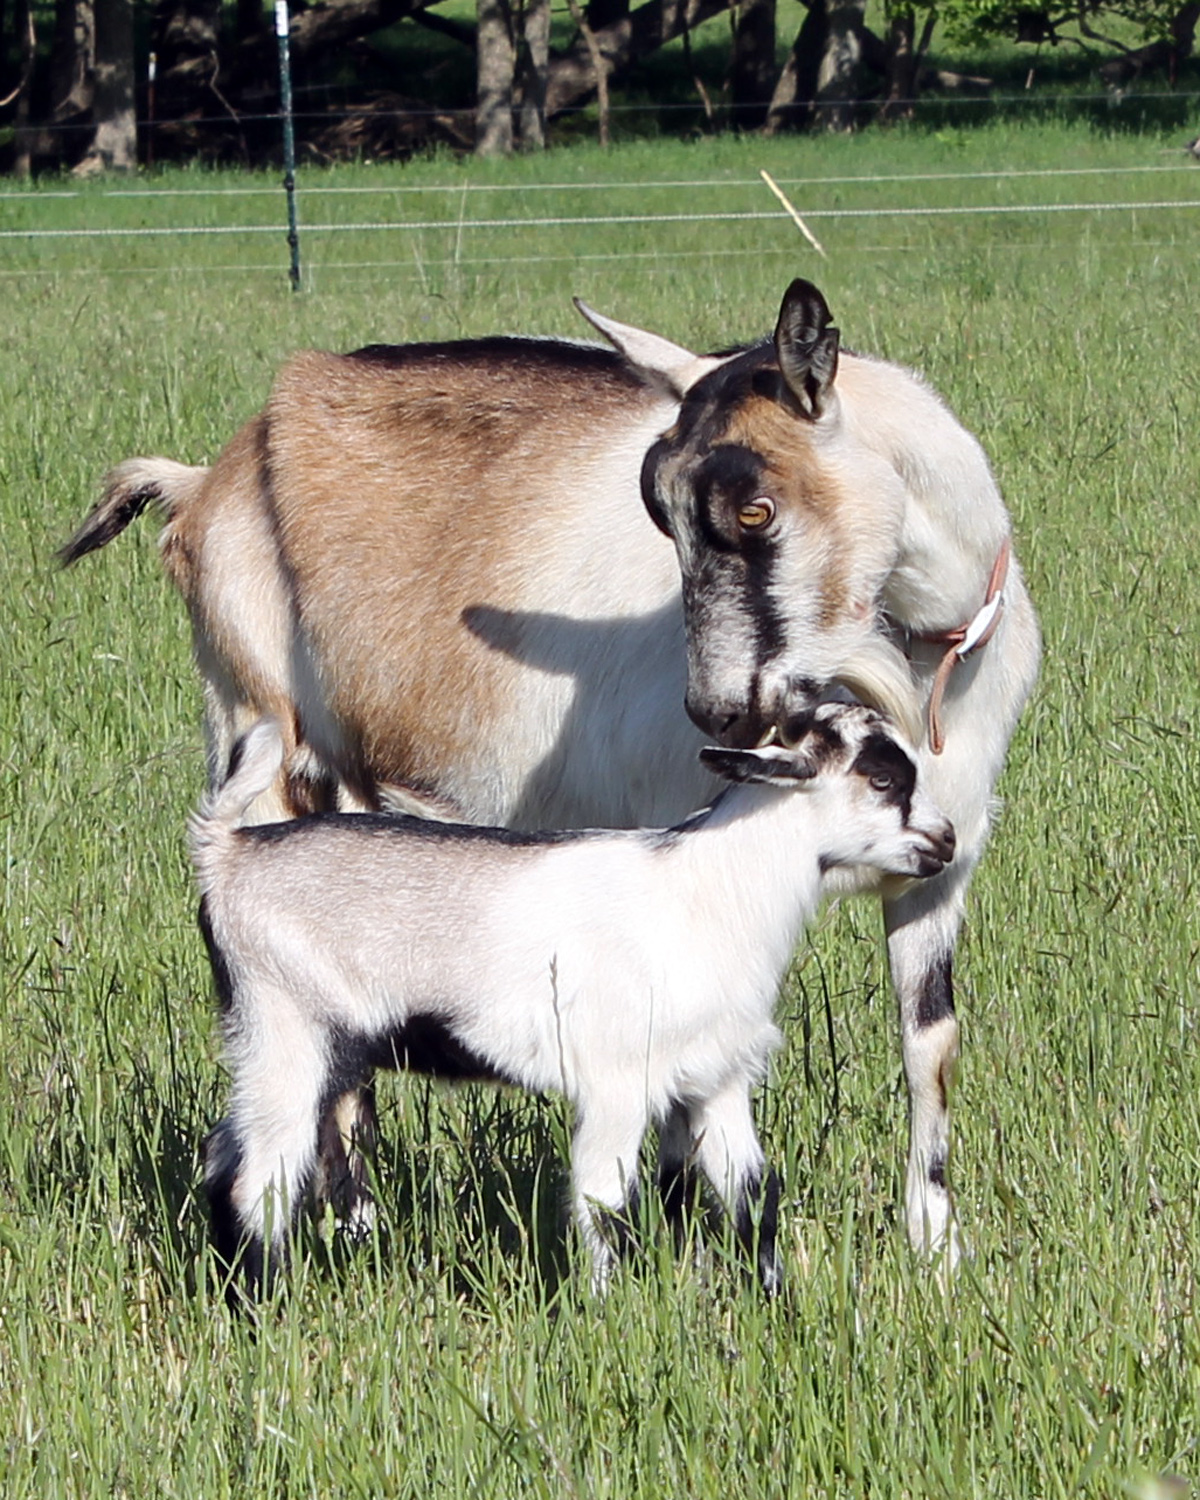 Mama goat kissing baby